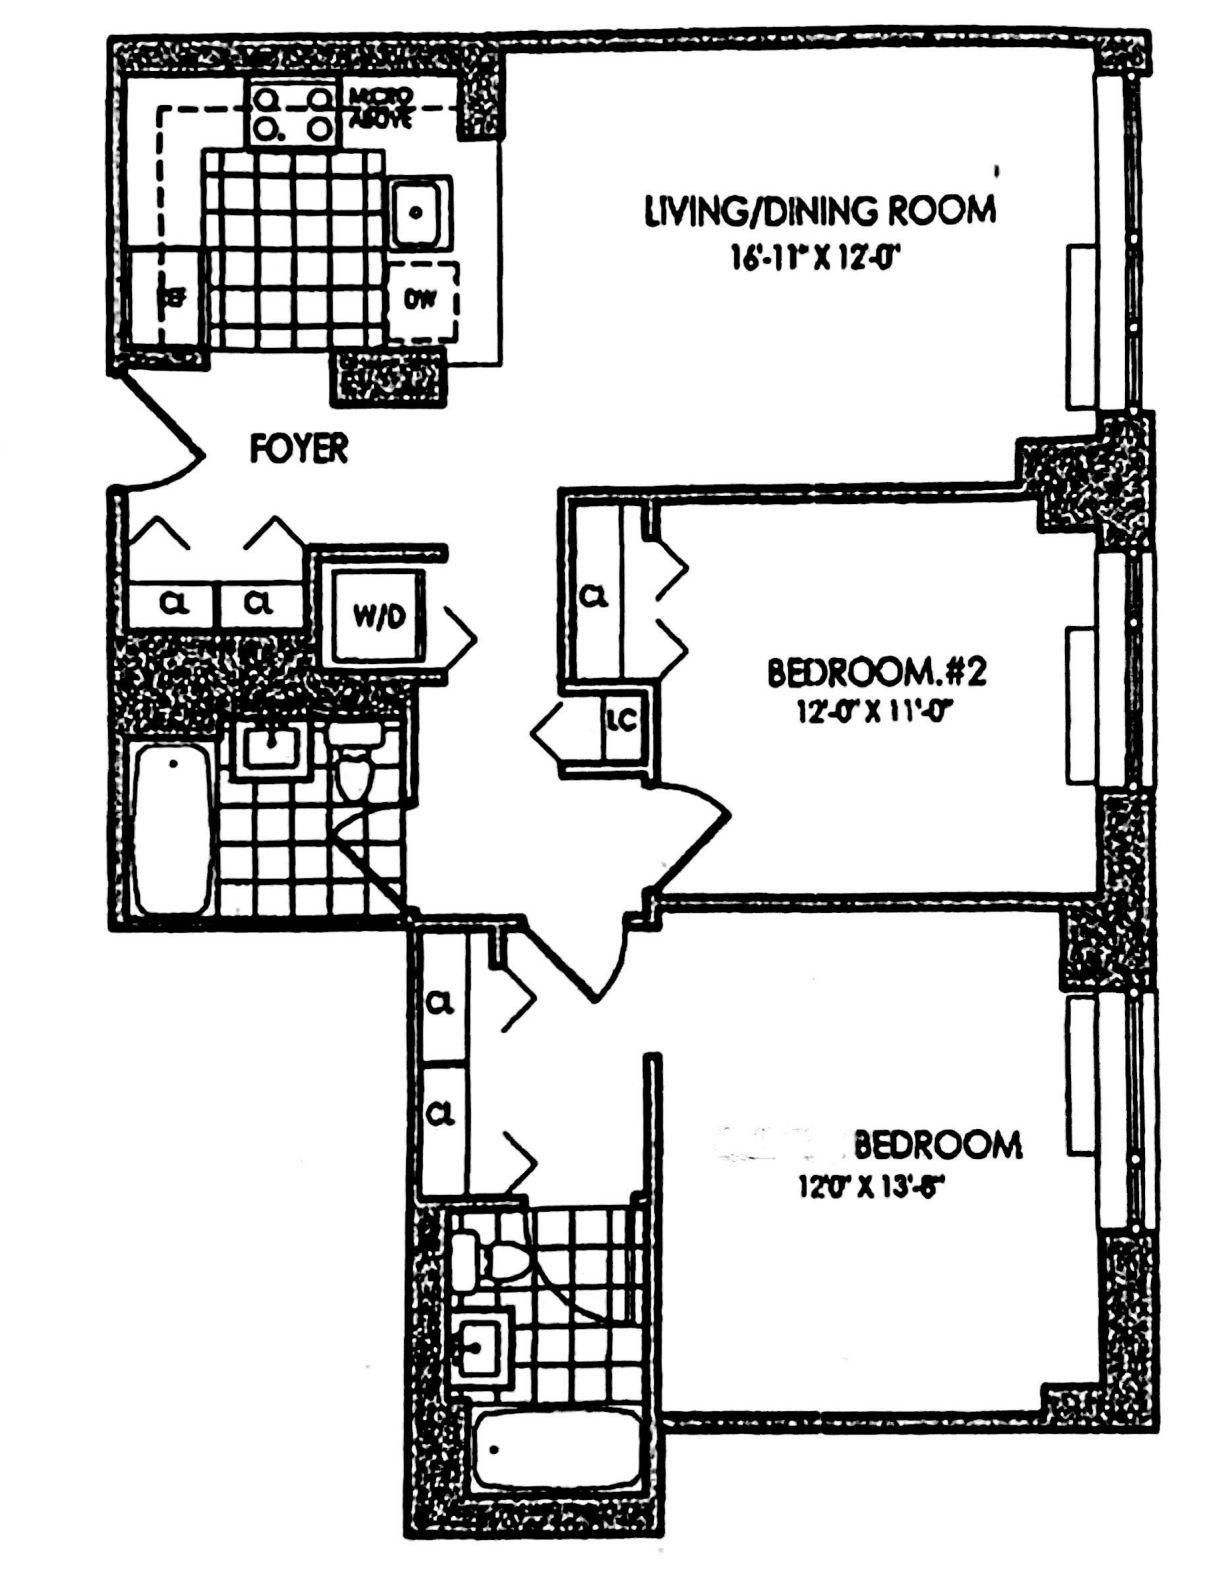 Floorplan for 455 Main Street, 15H